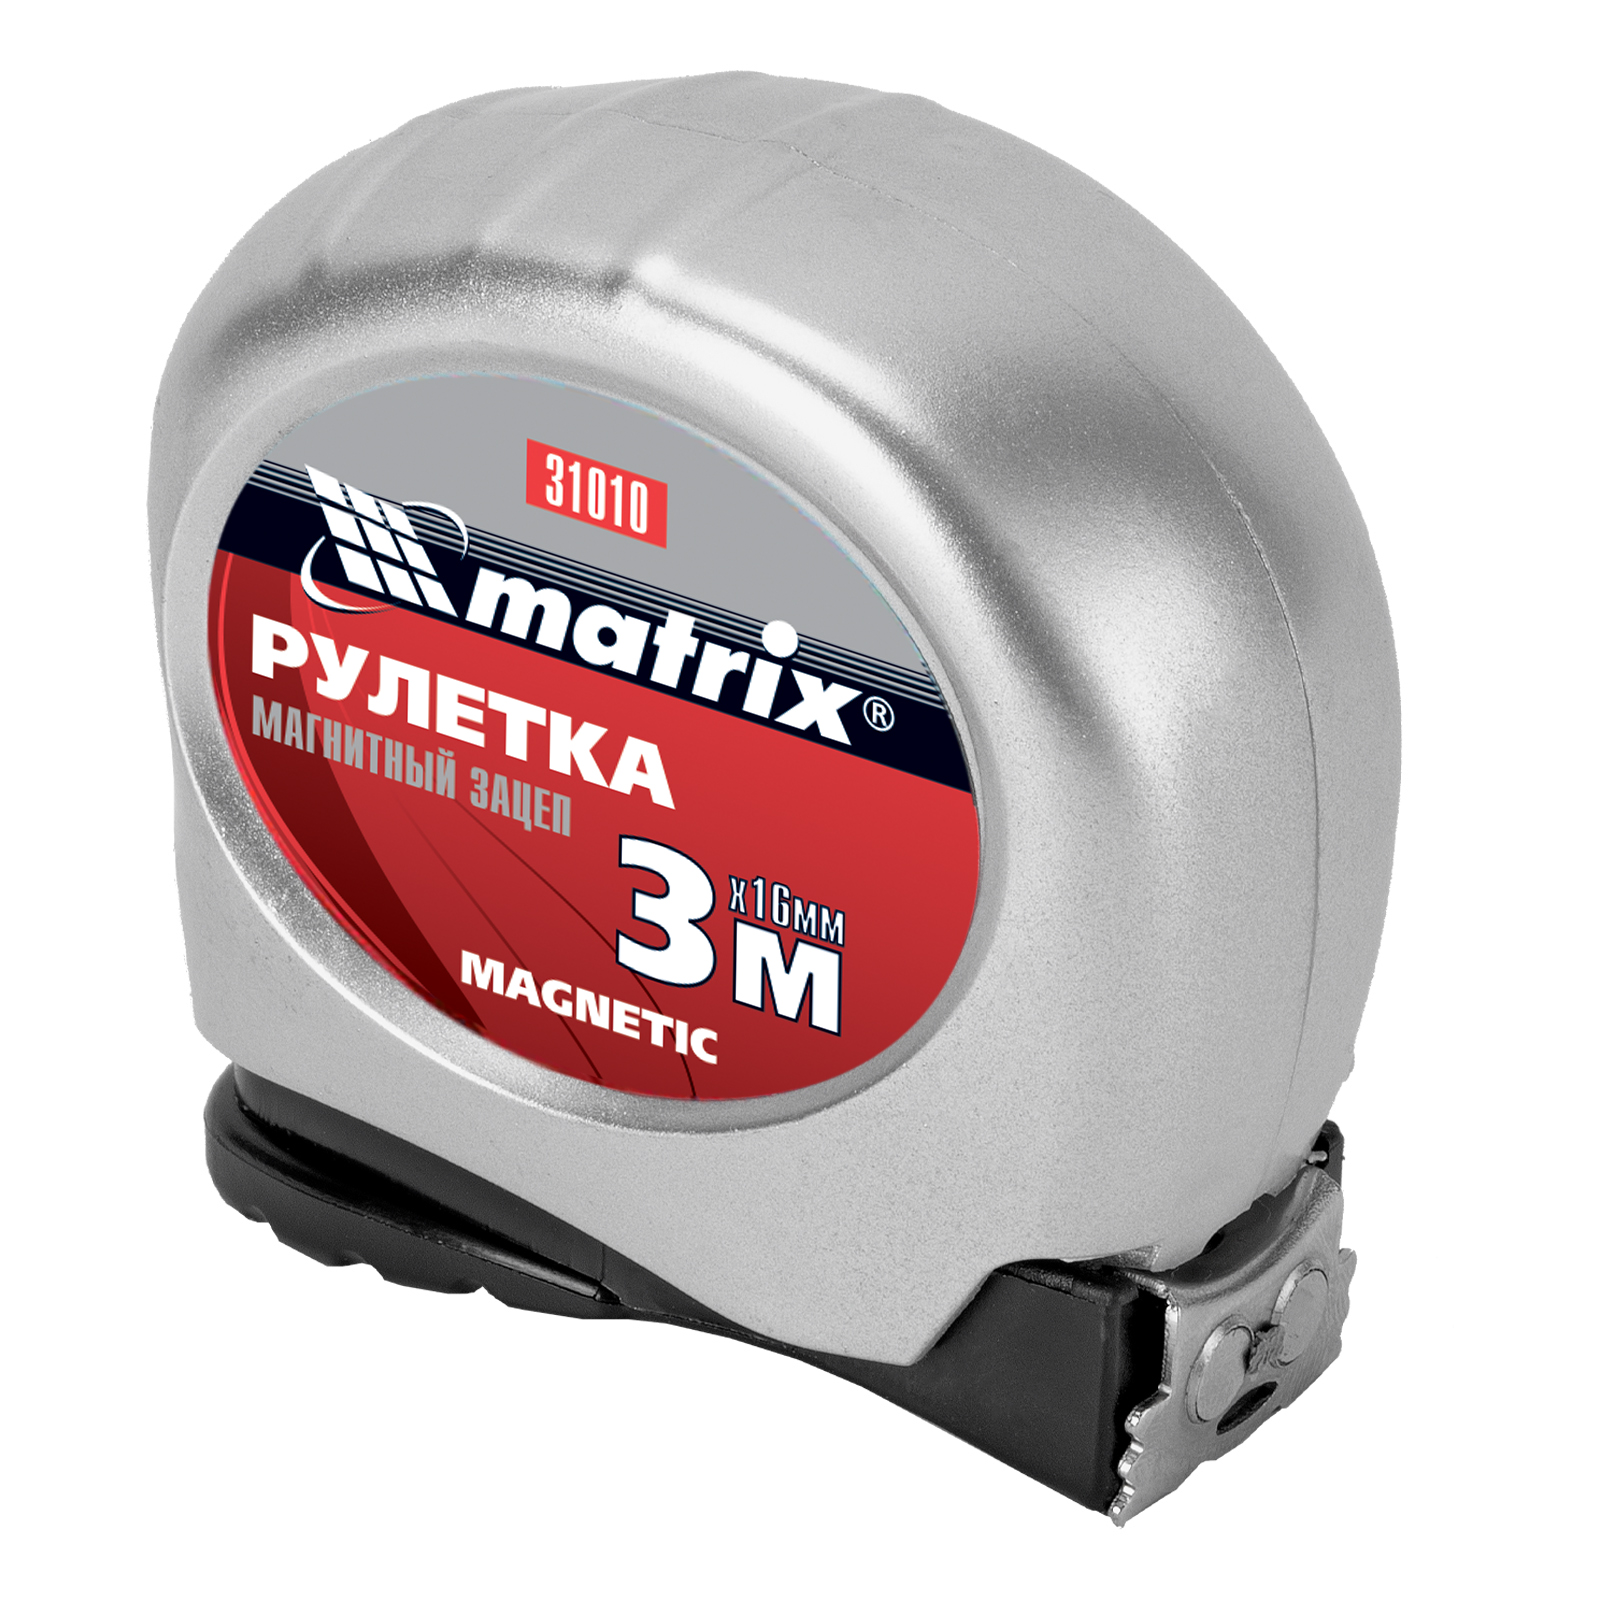 Рулетка MATRIX Magnetic 3мх16мм 31010 рулетка matrix strong 3мх16мм 31078